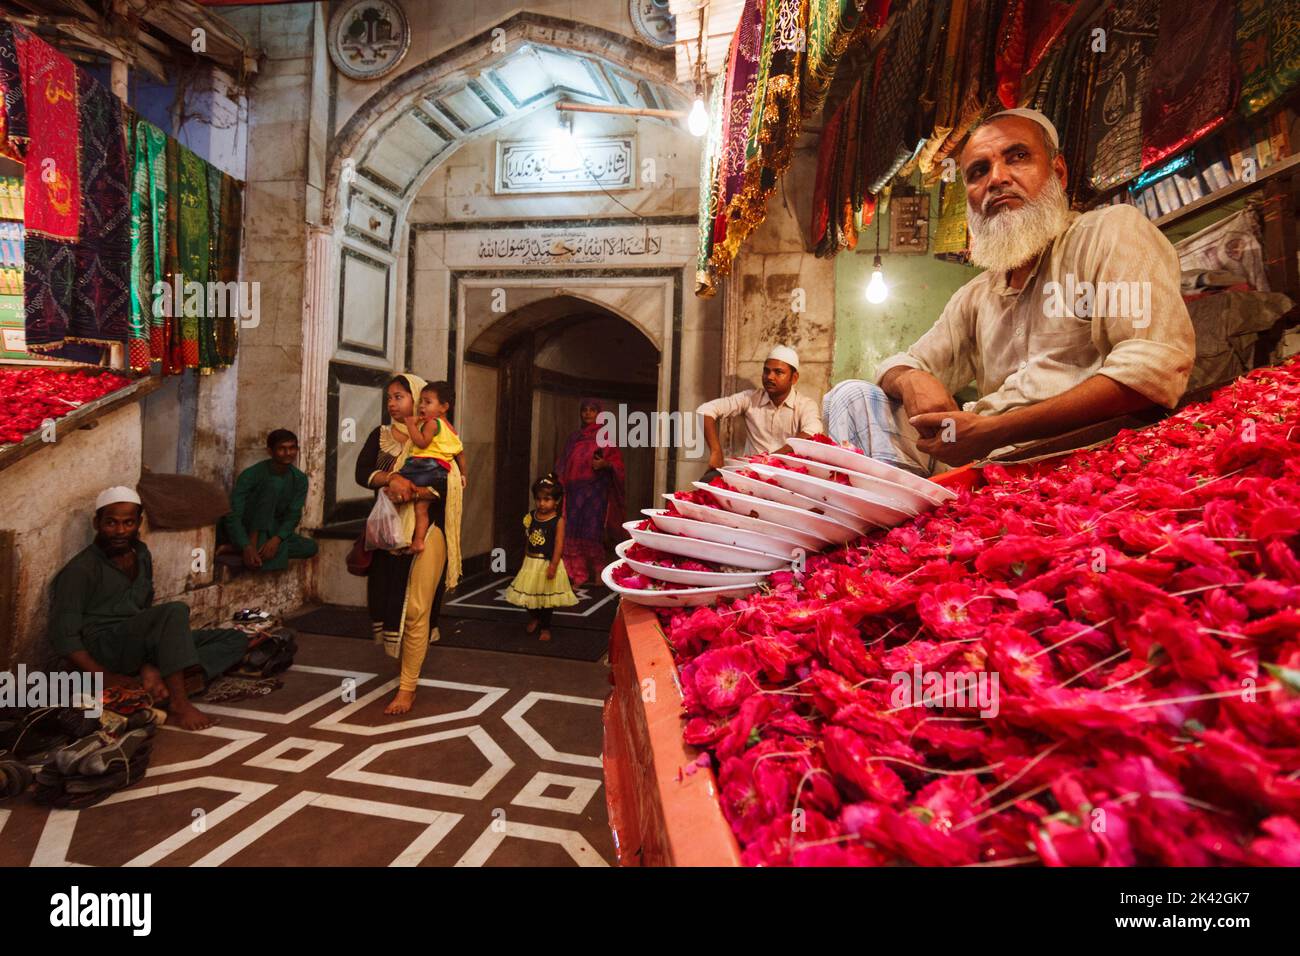 Delhi, India : A vendor seats at a rose petals stall at the entrance of Nizamuddin Dargah. The bazaars around offer all kinds of attars (perfumes) and Stock Photo